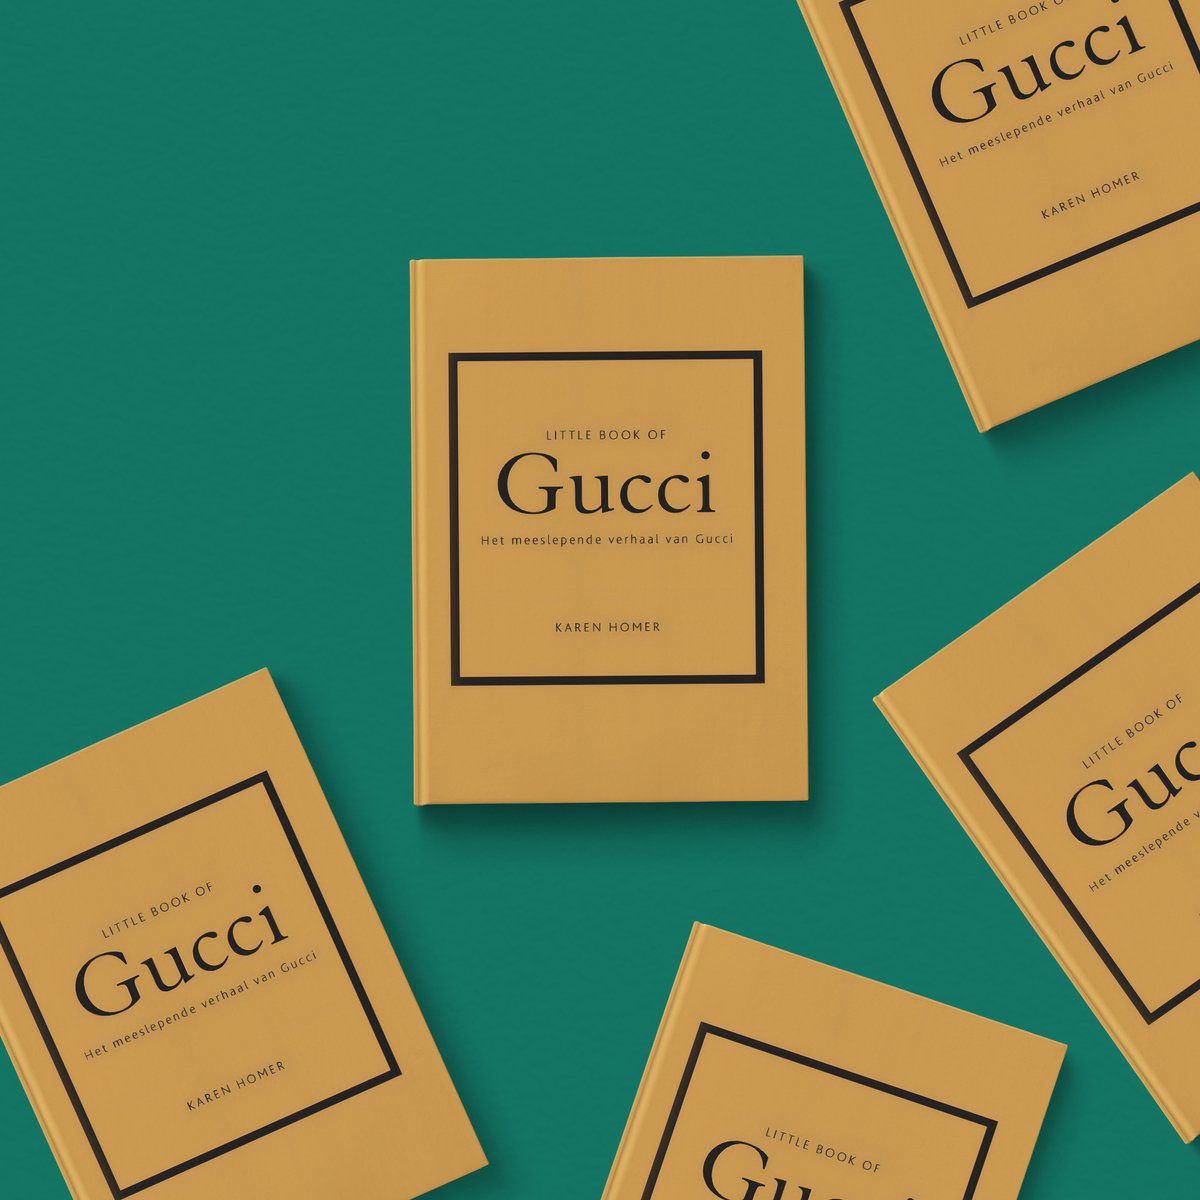 Little Book of Gucci by Karen Homer, Hardcover